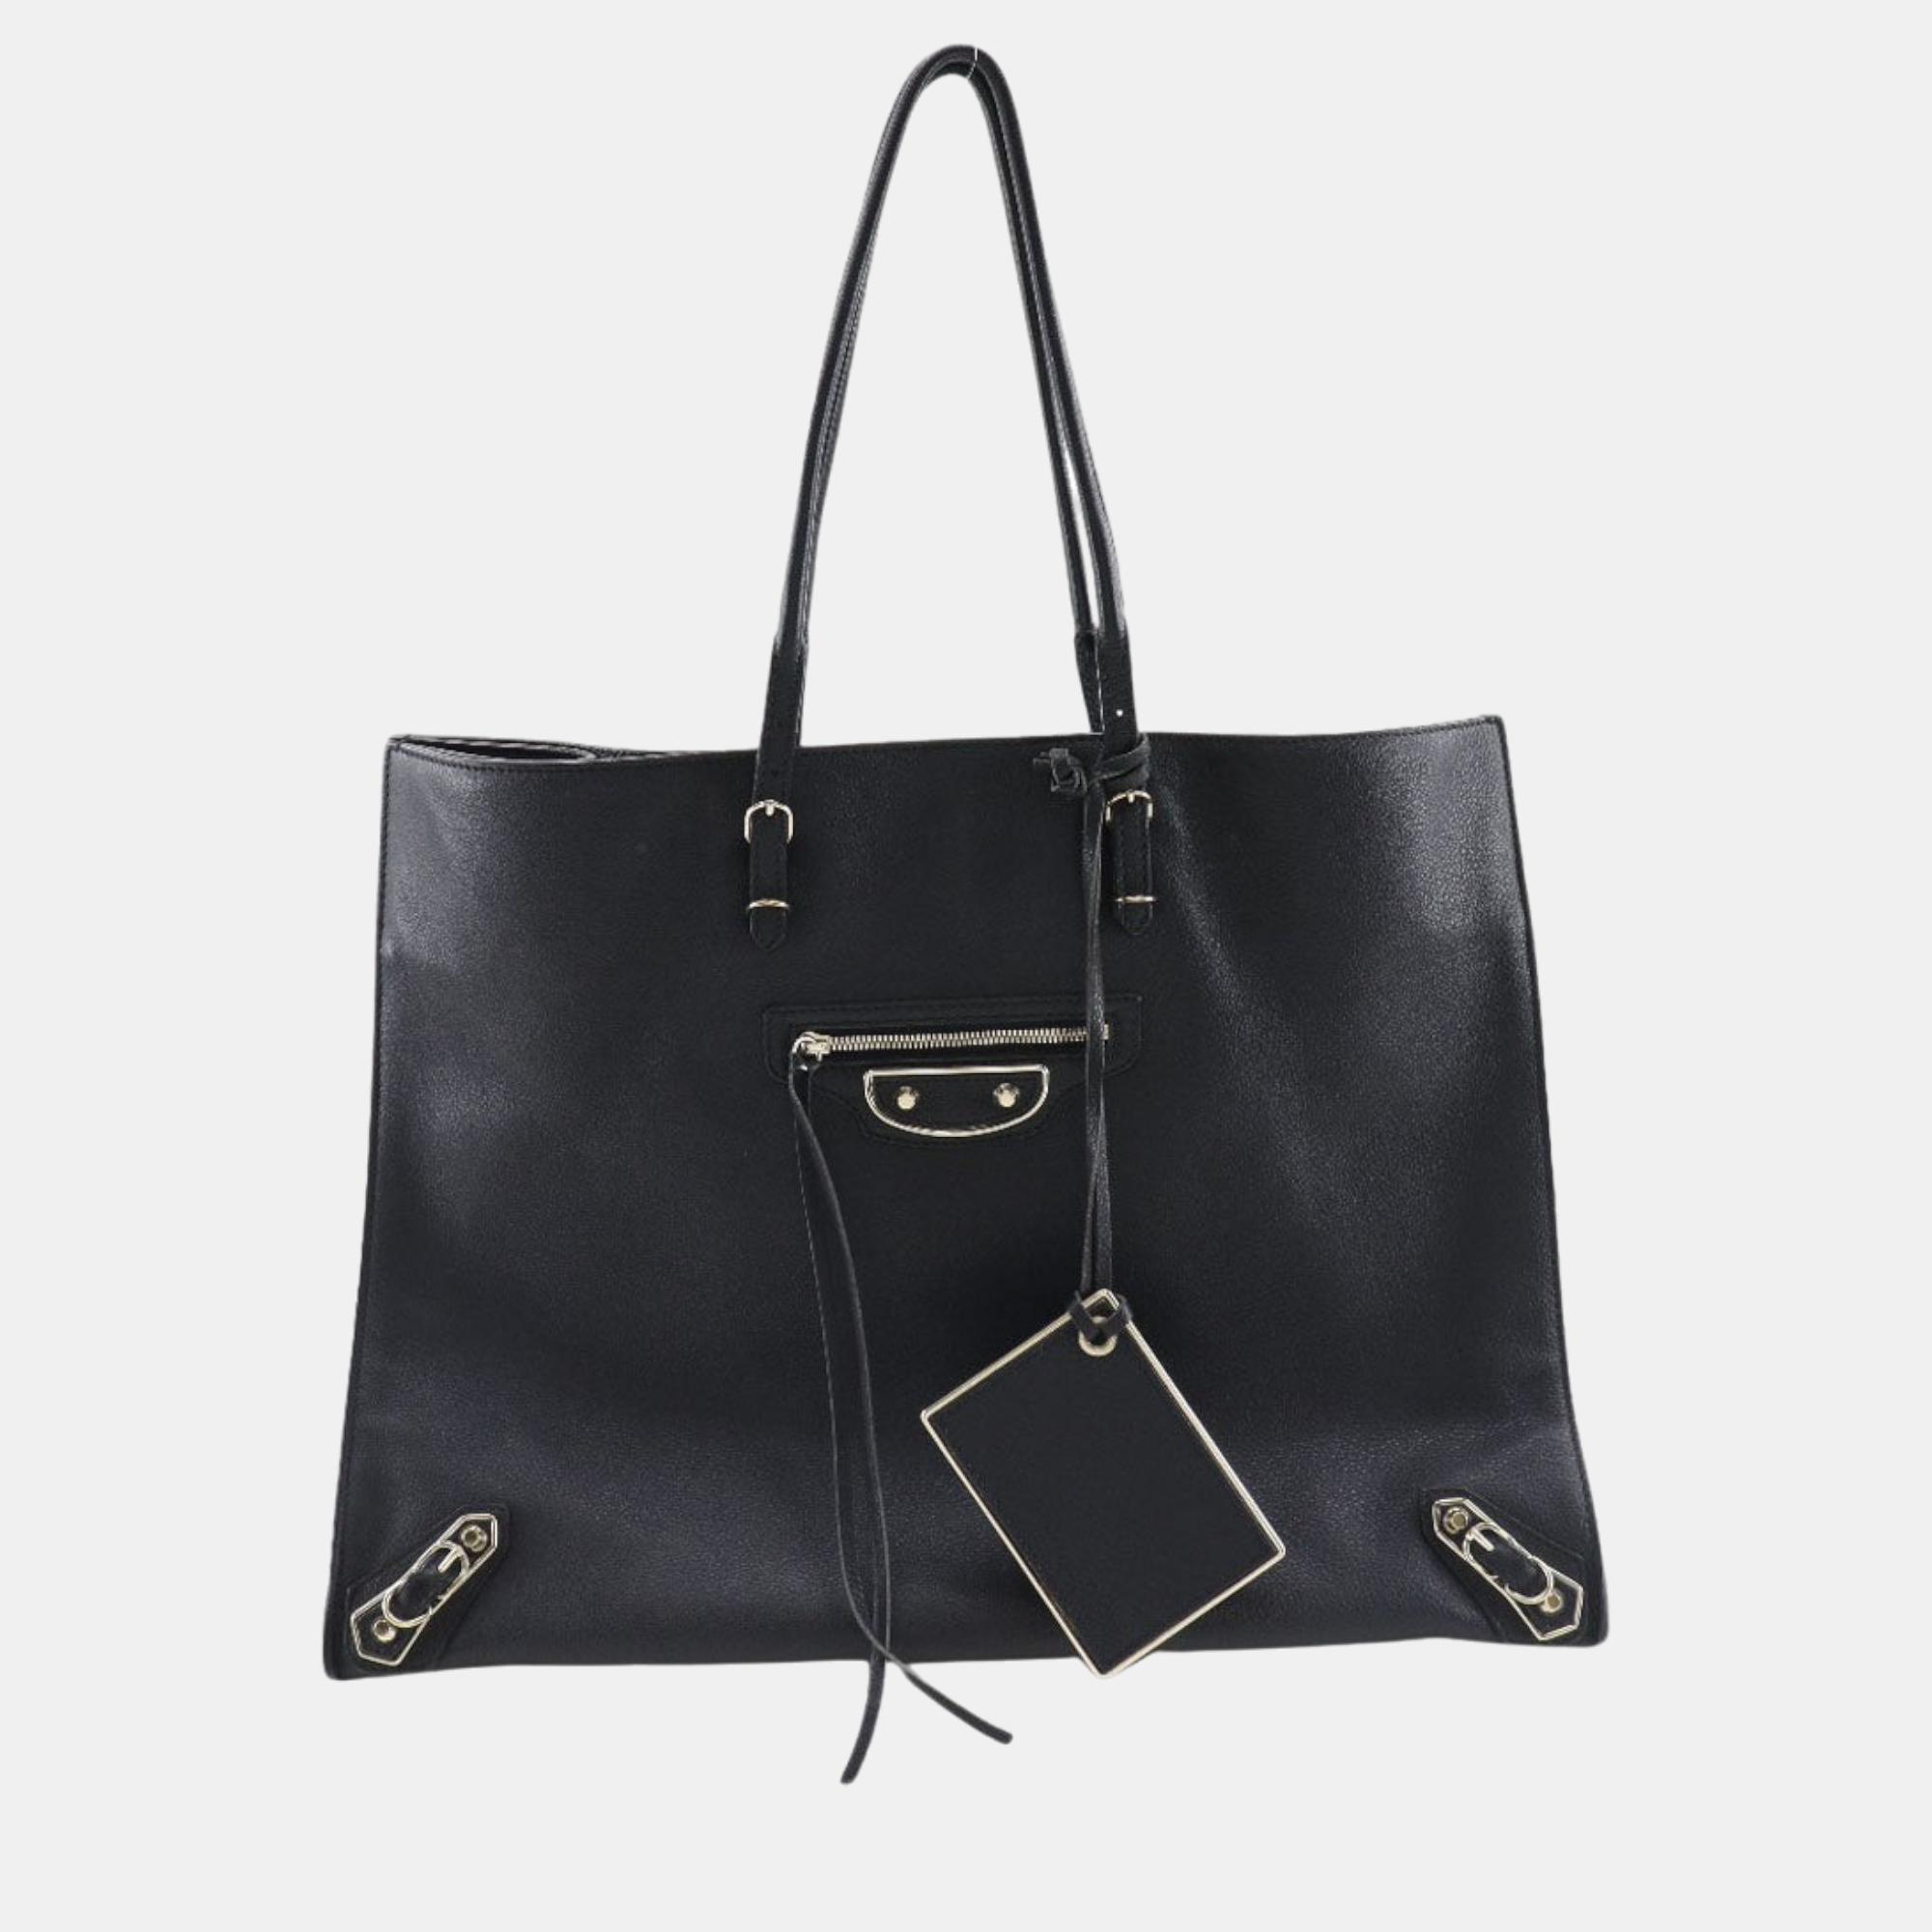 Balenciaga black leather papier tote bag